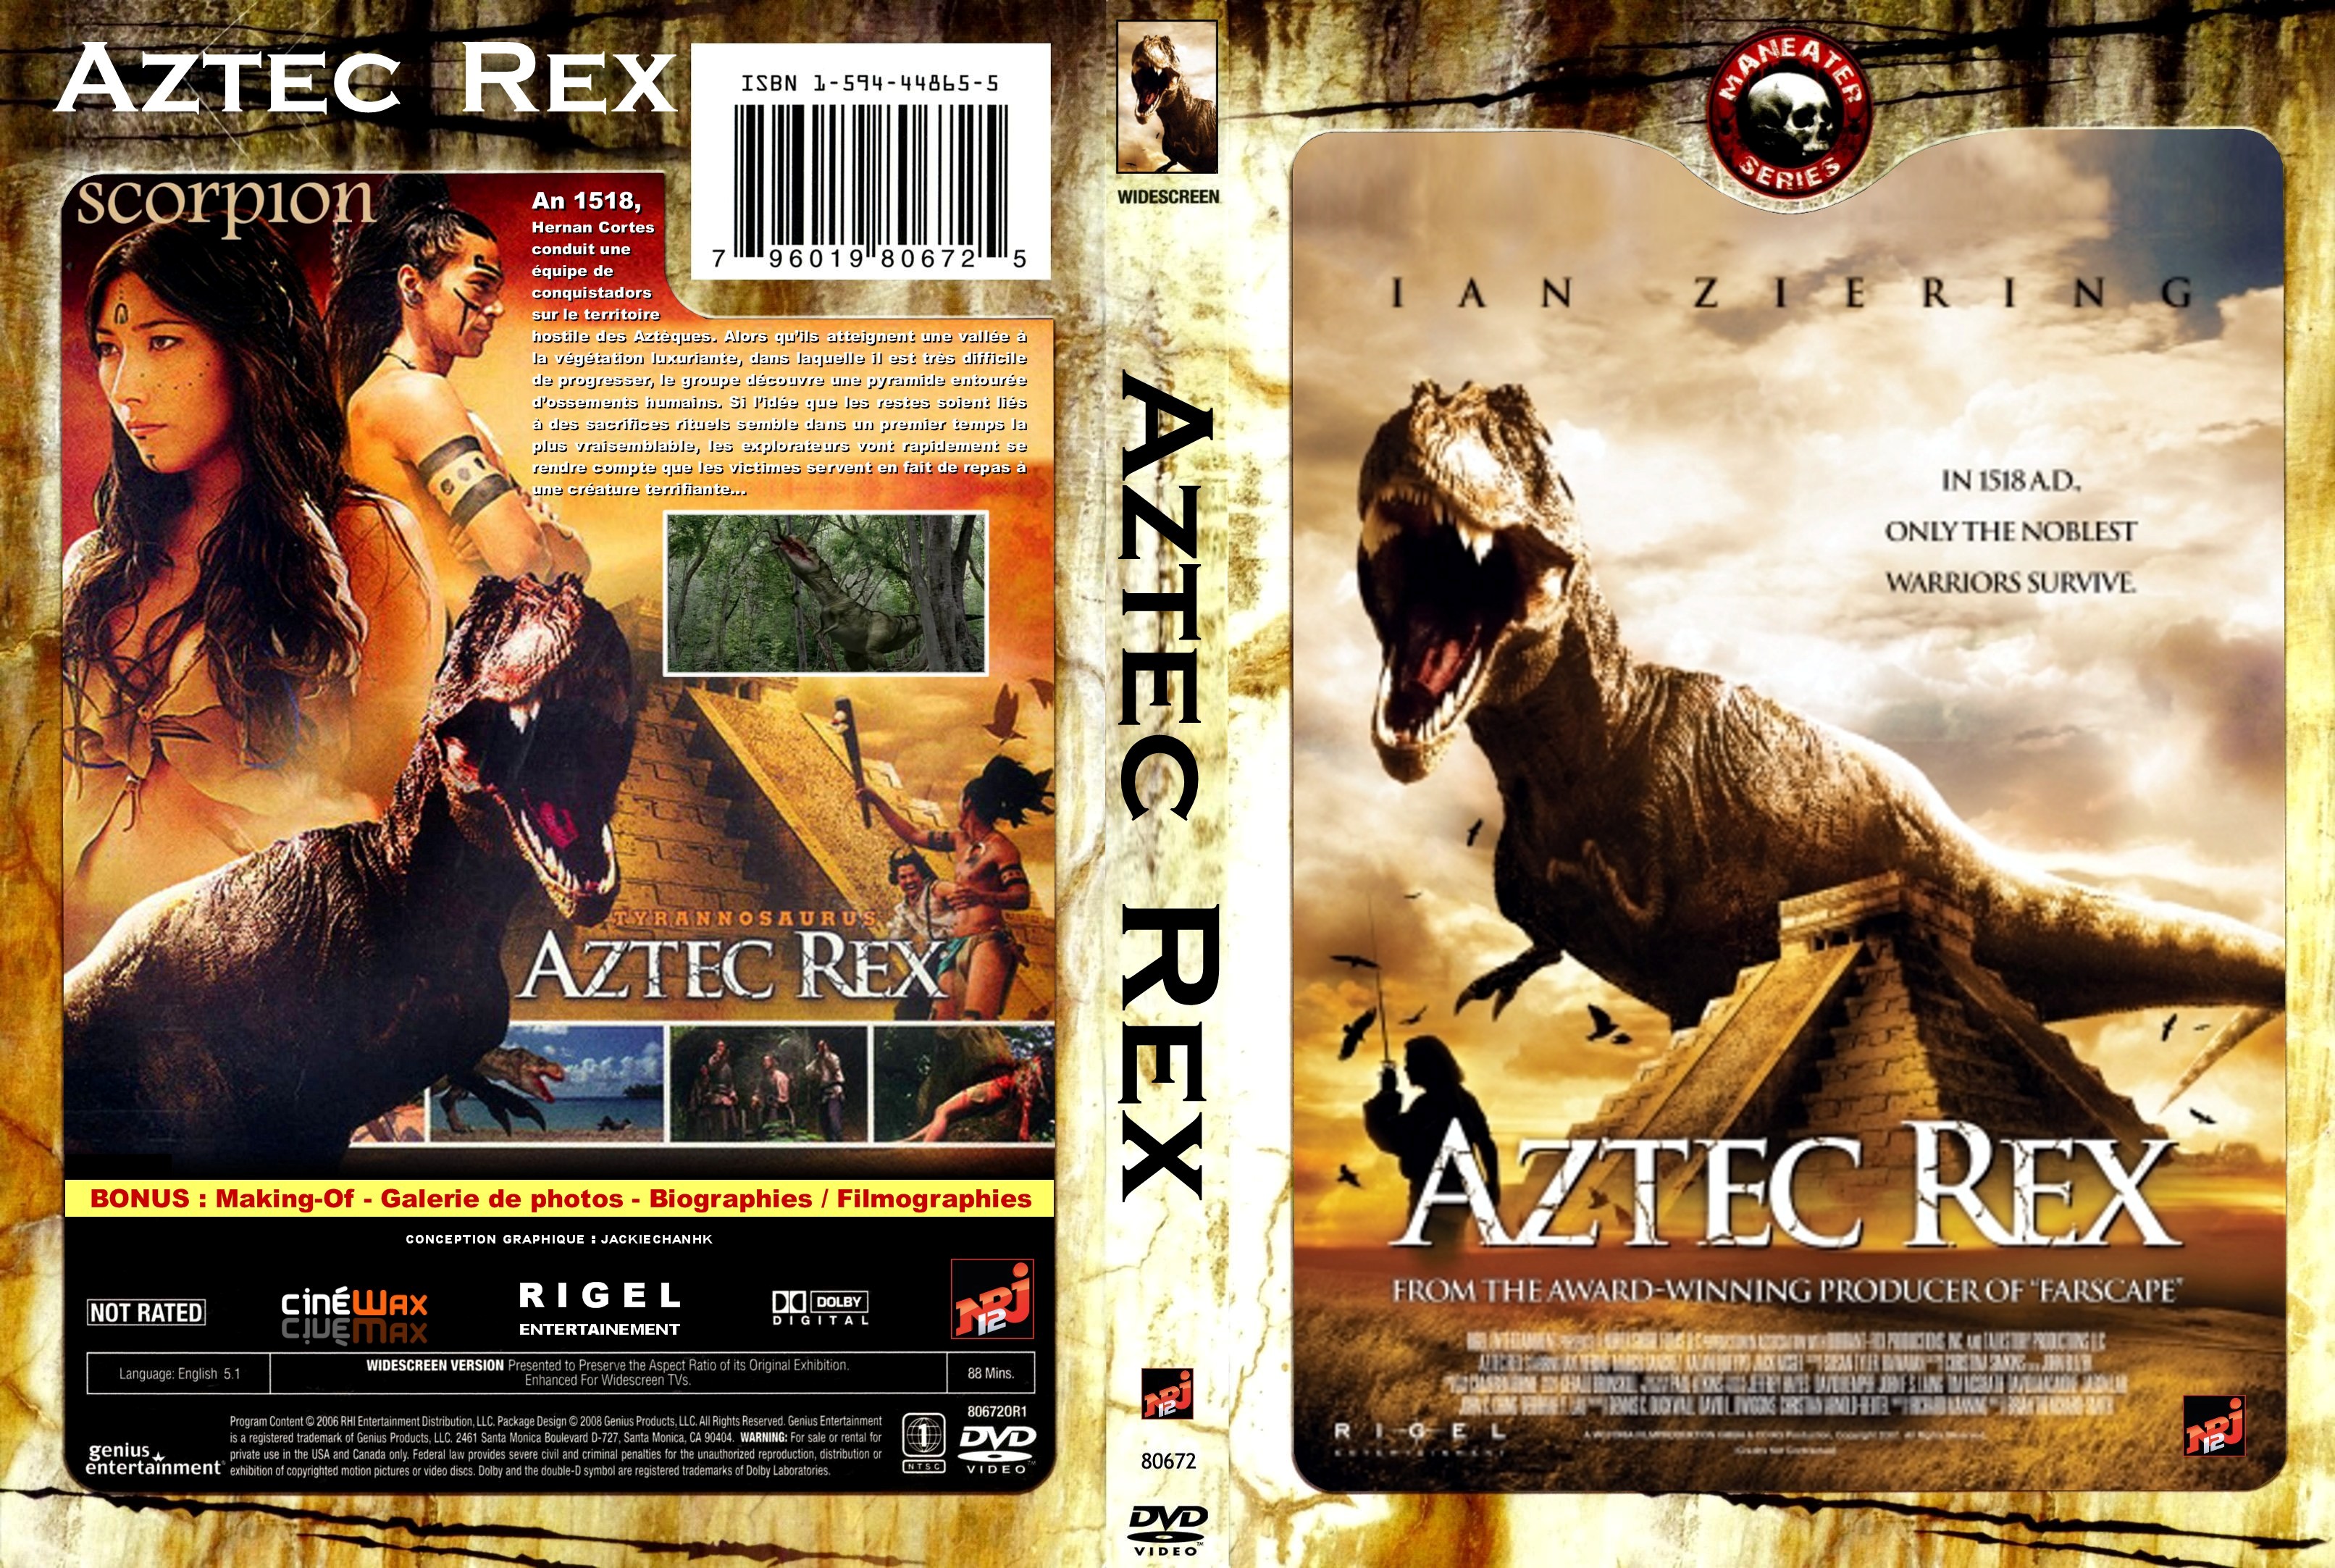 Jaquette DVD Aztec rex custom